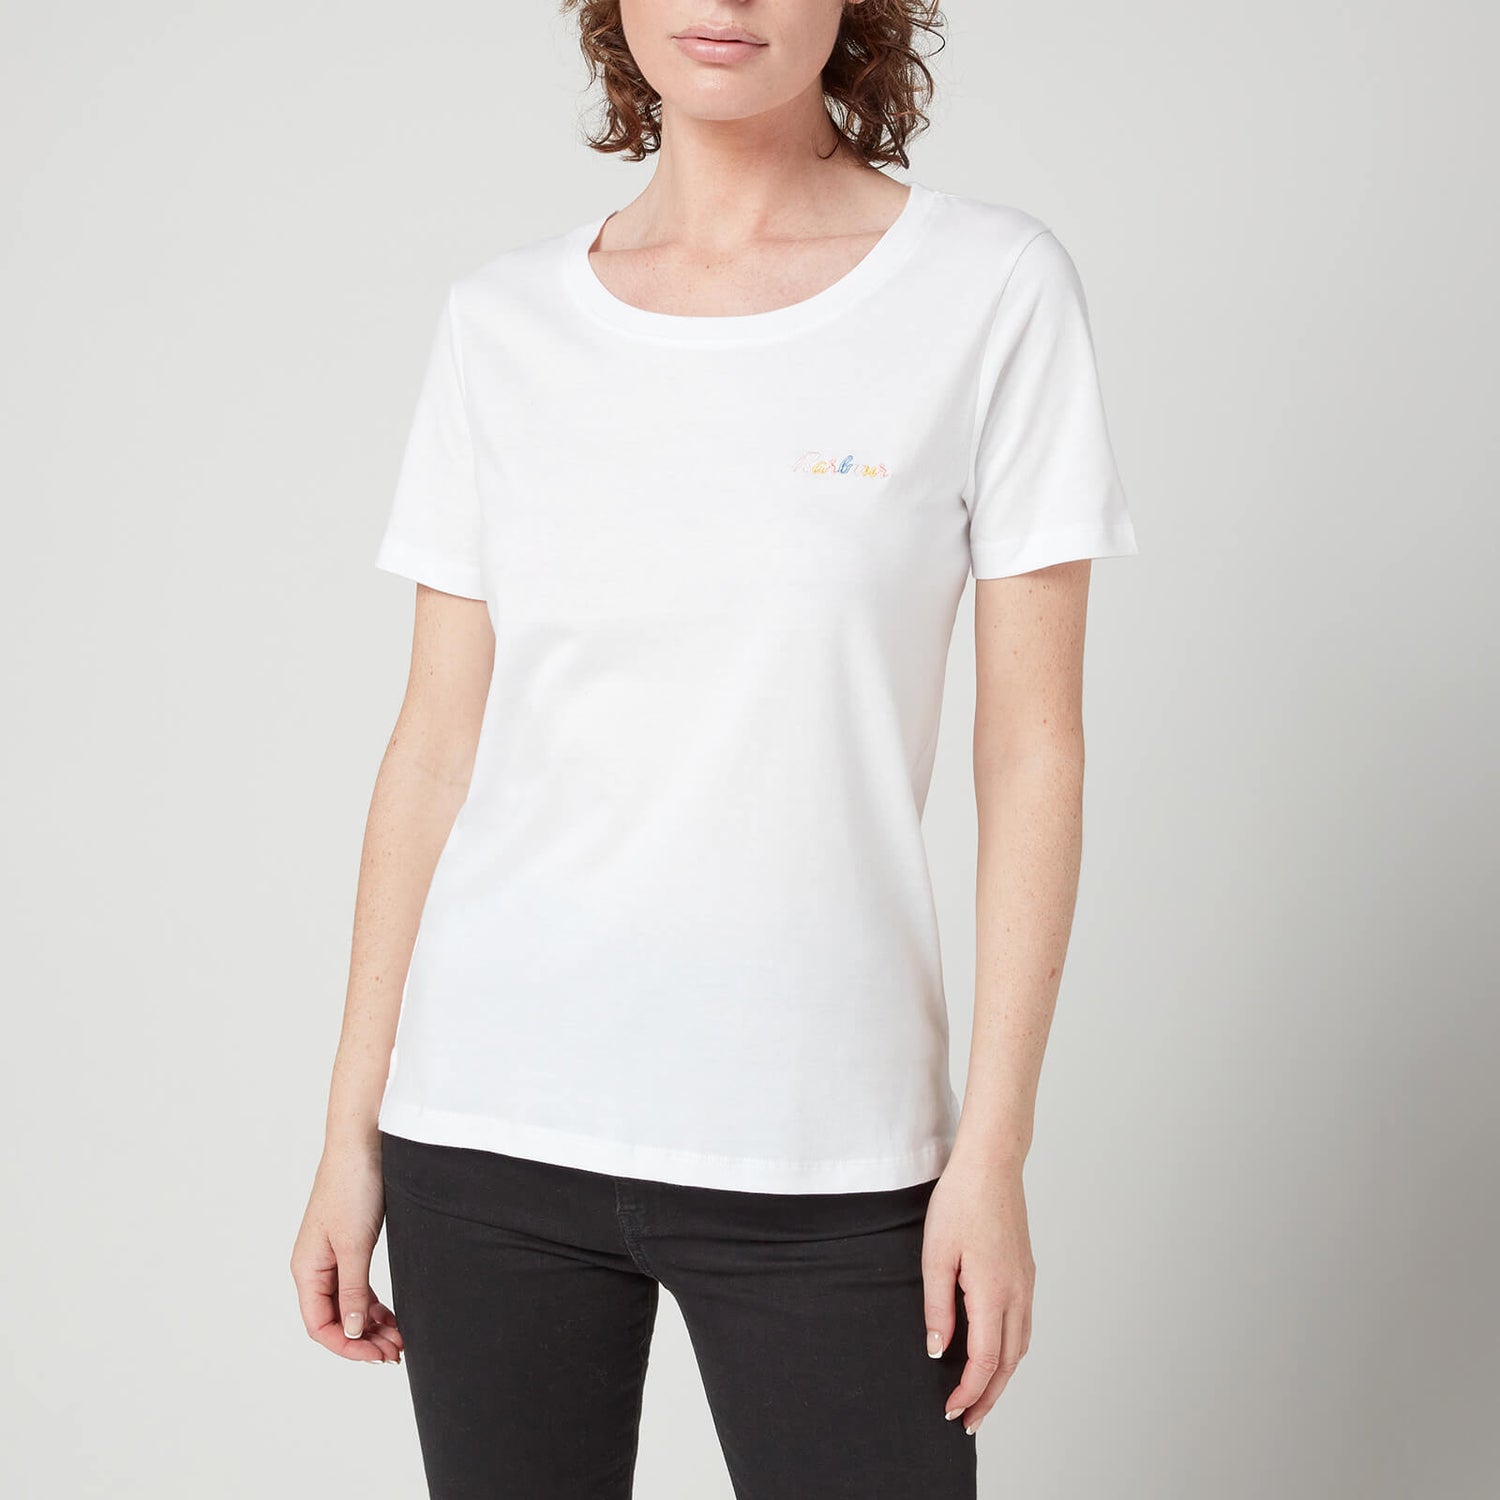 Barbour Women's Amble T-Shirt - White